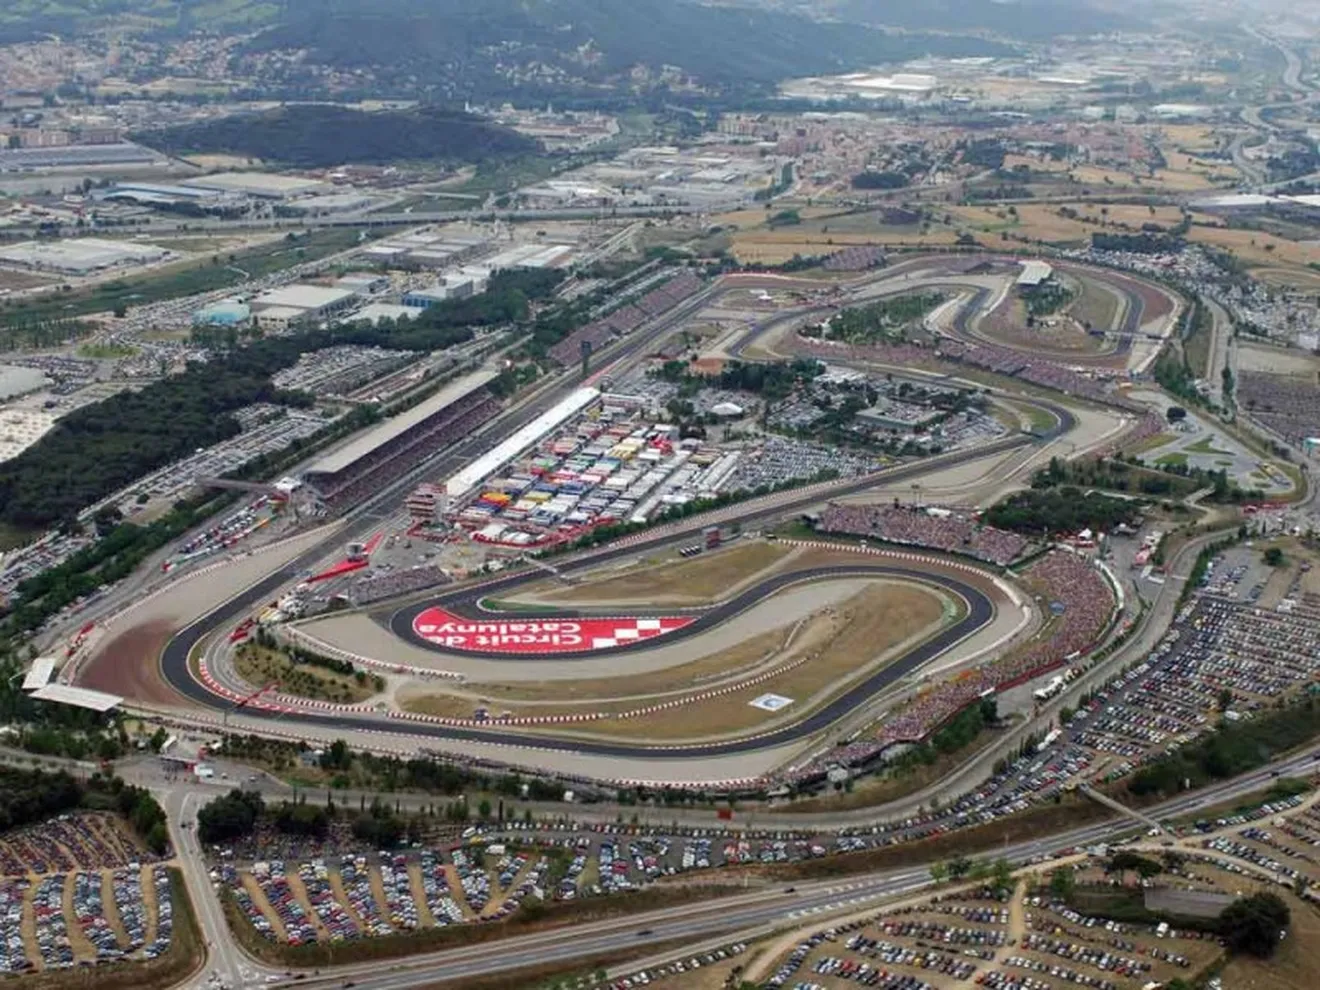 Circuit de Catalunya